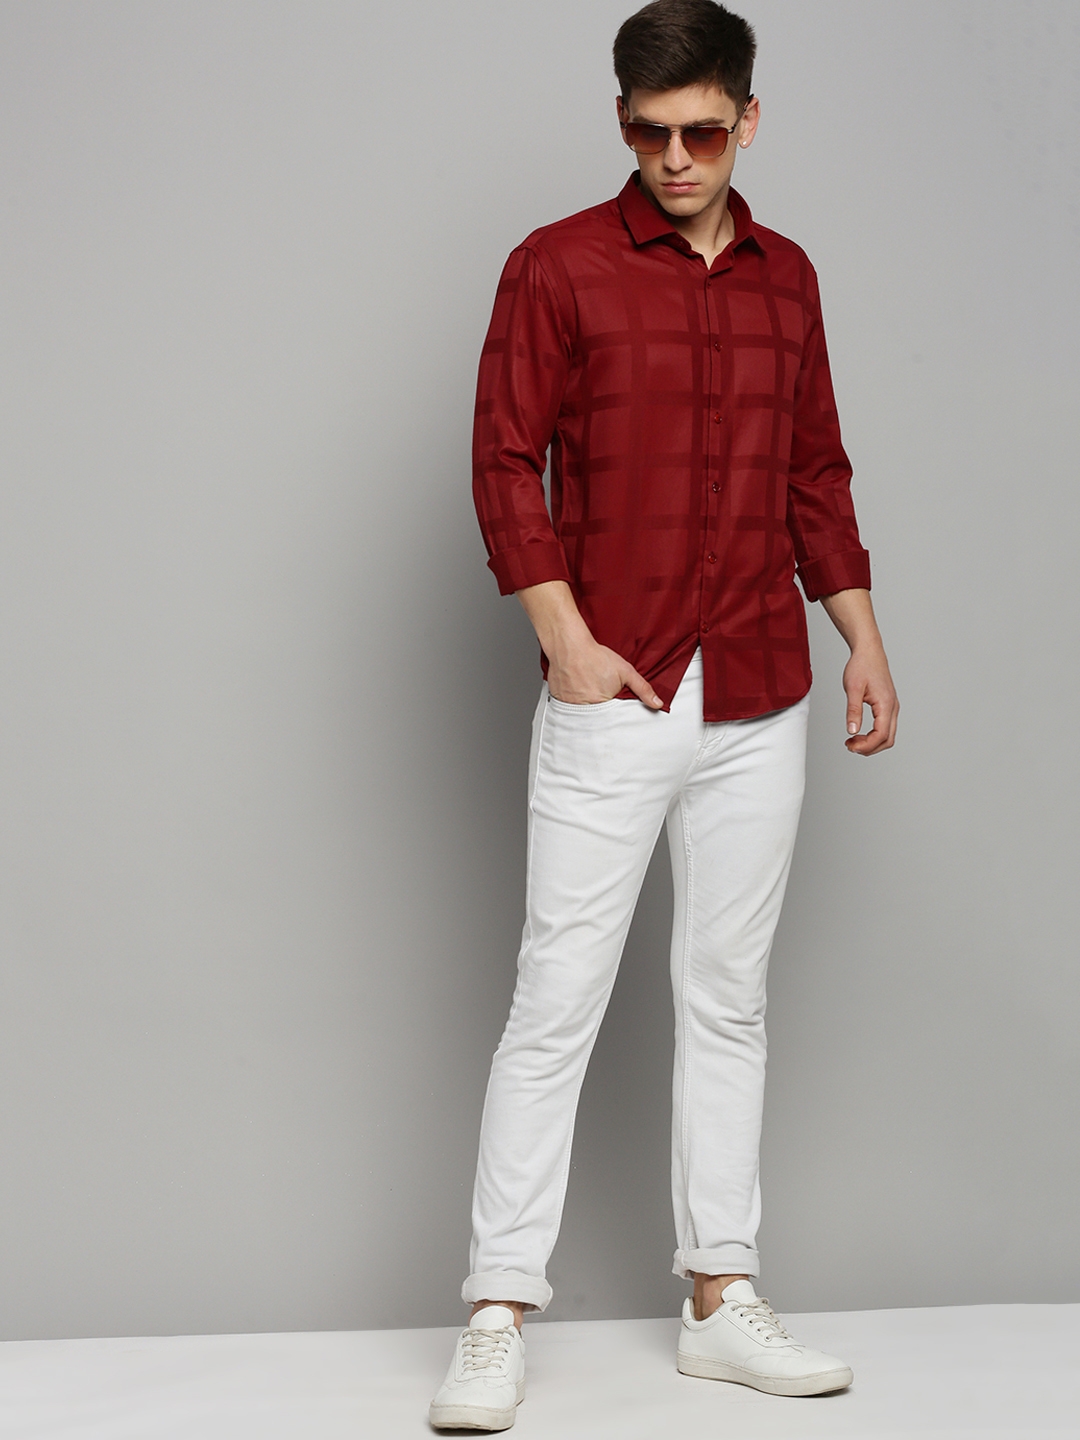 Showoff | SHOWOFF Men's Spread Collar Solid Maroon Classic Shirt 4